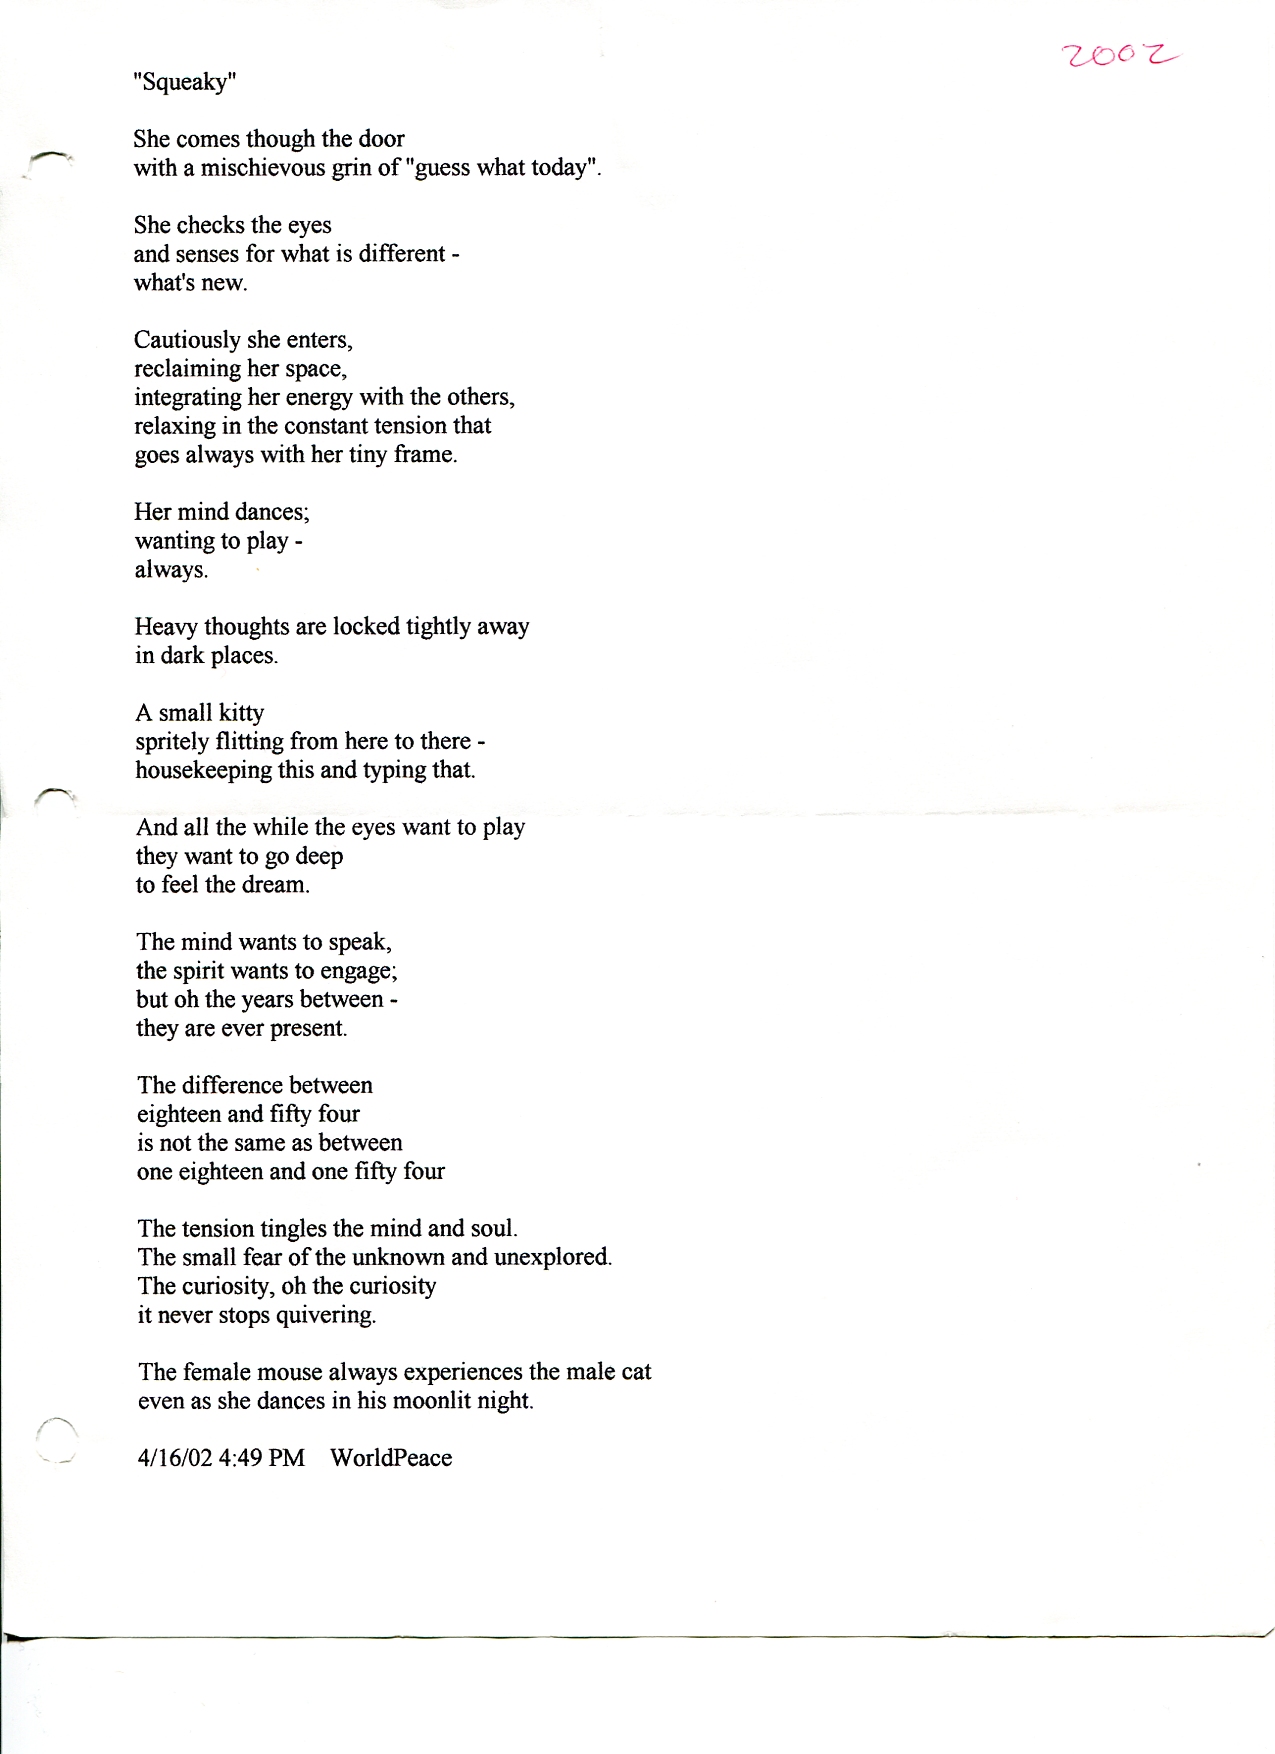 John WorldPeace Poems 2002 | World Peace Poems